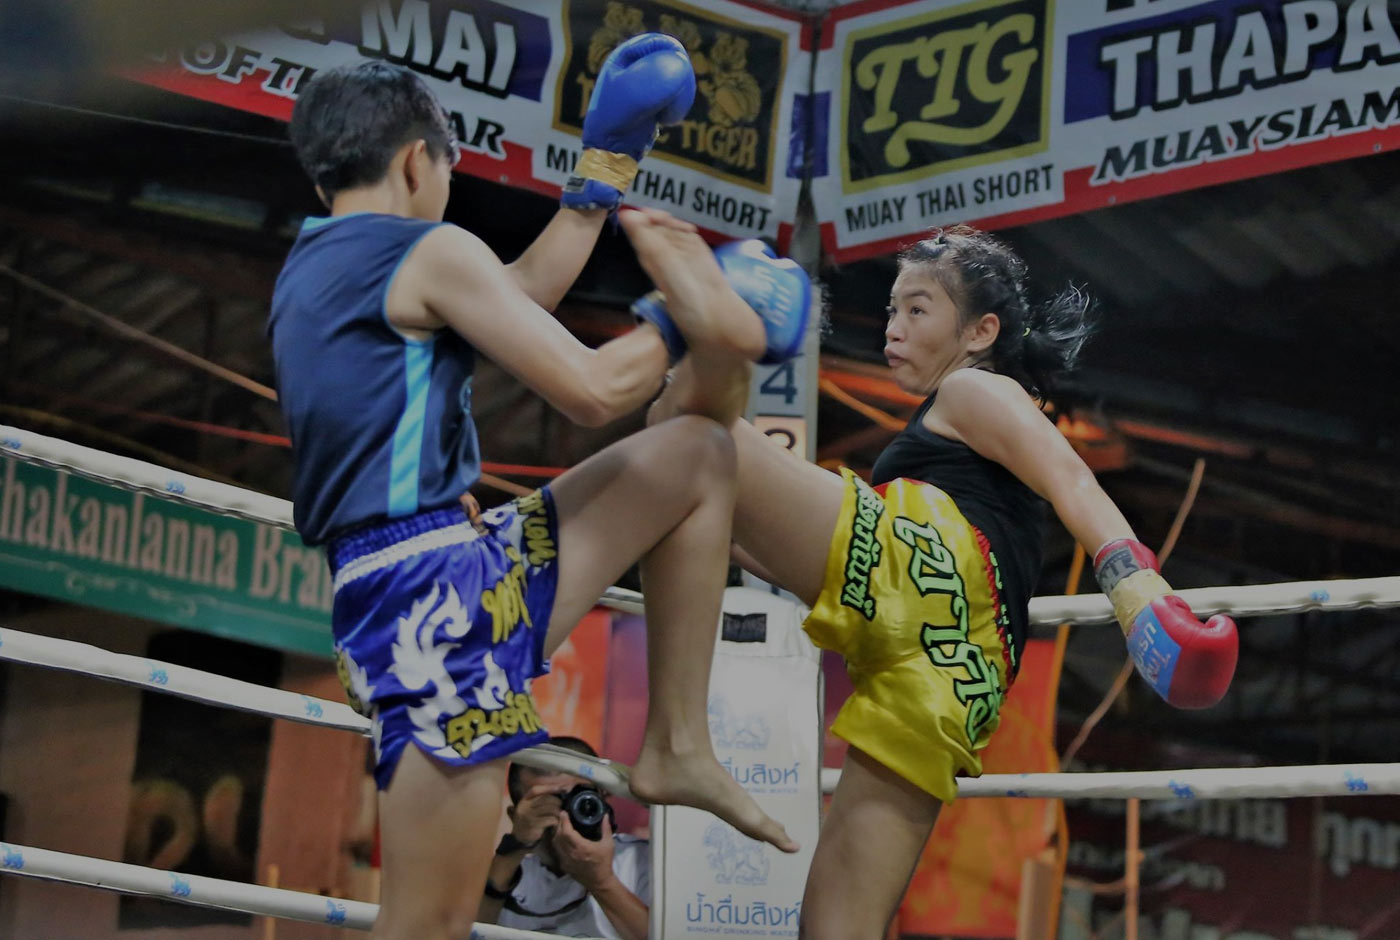 Traditional Muay Thai